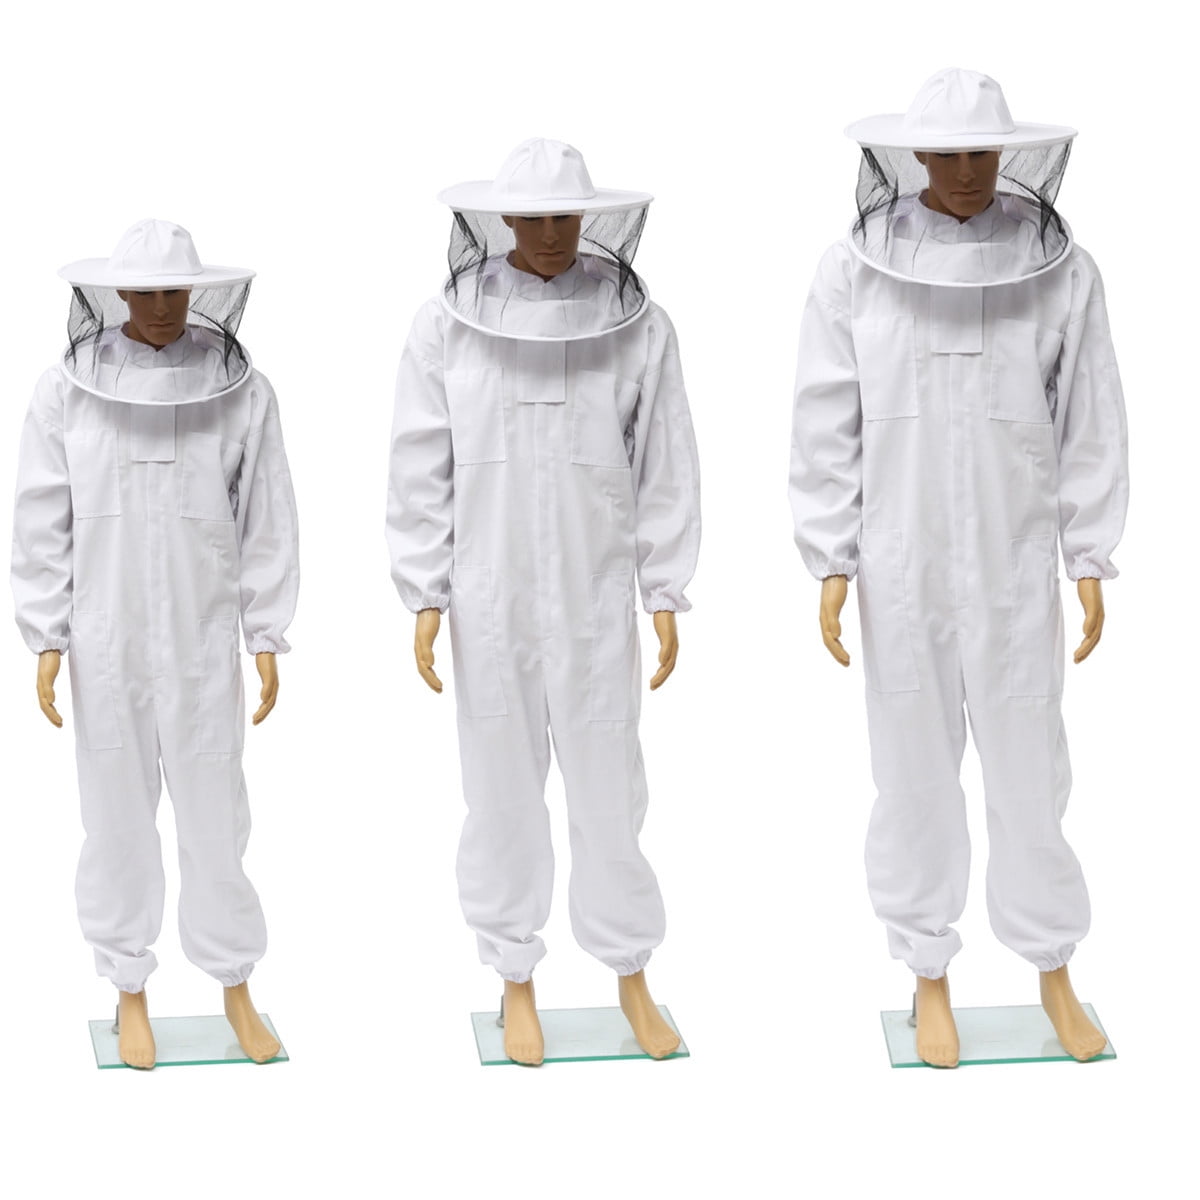 Beekeeper Protection Bee keeping Suit Safty Veil Hat All Body Equipment Hood 2XL 